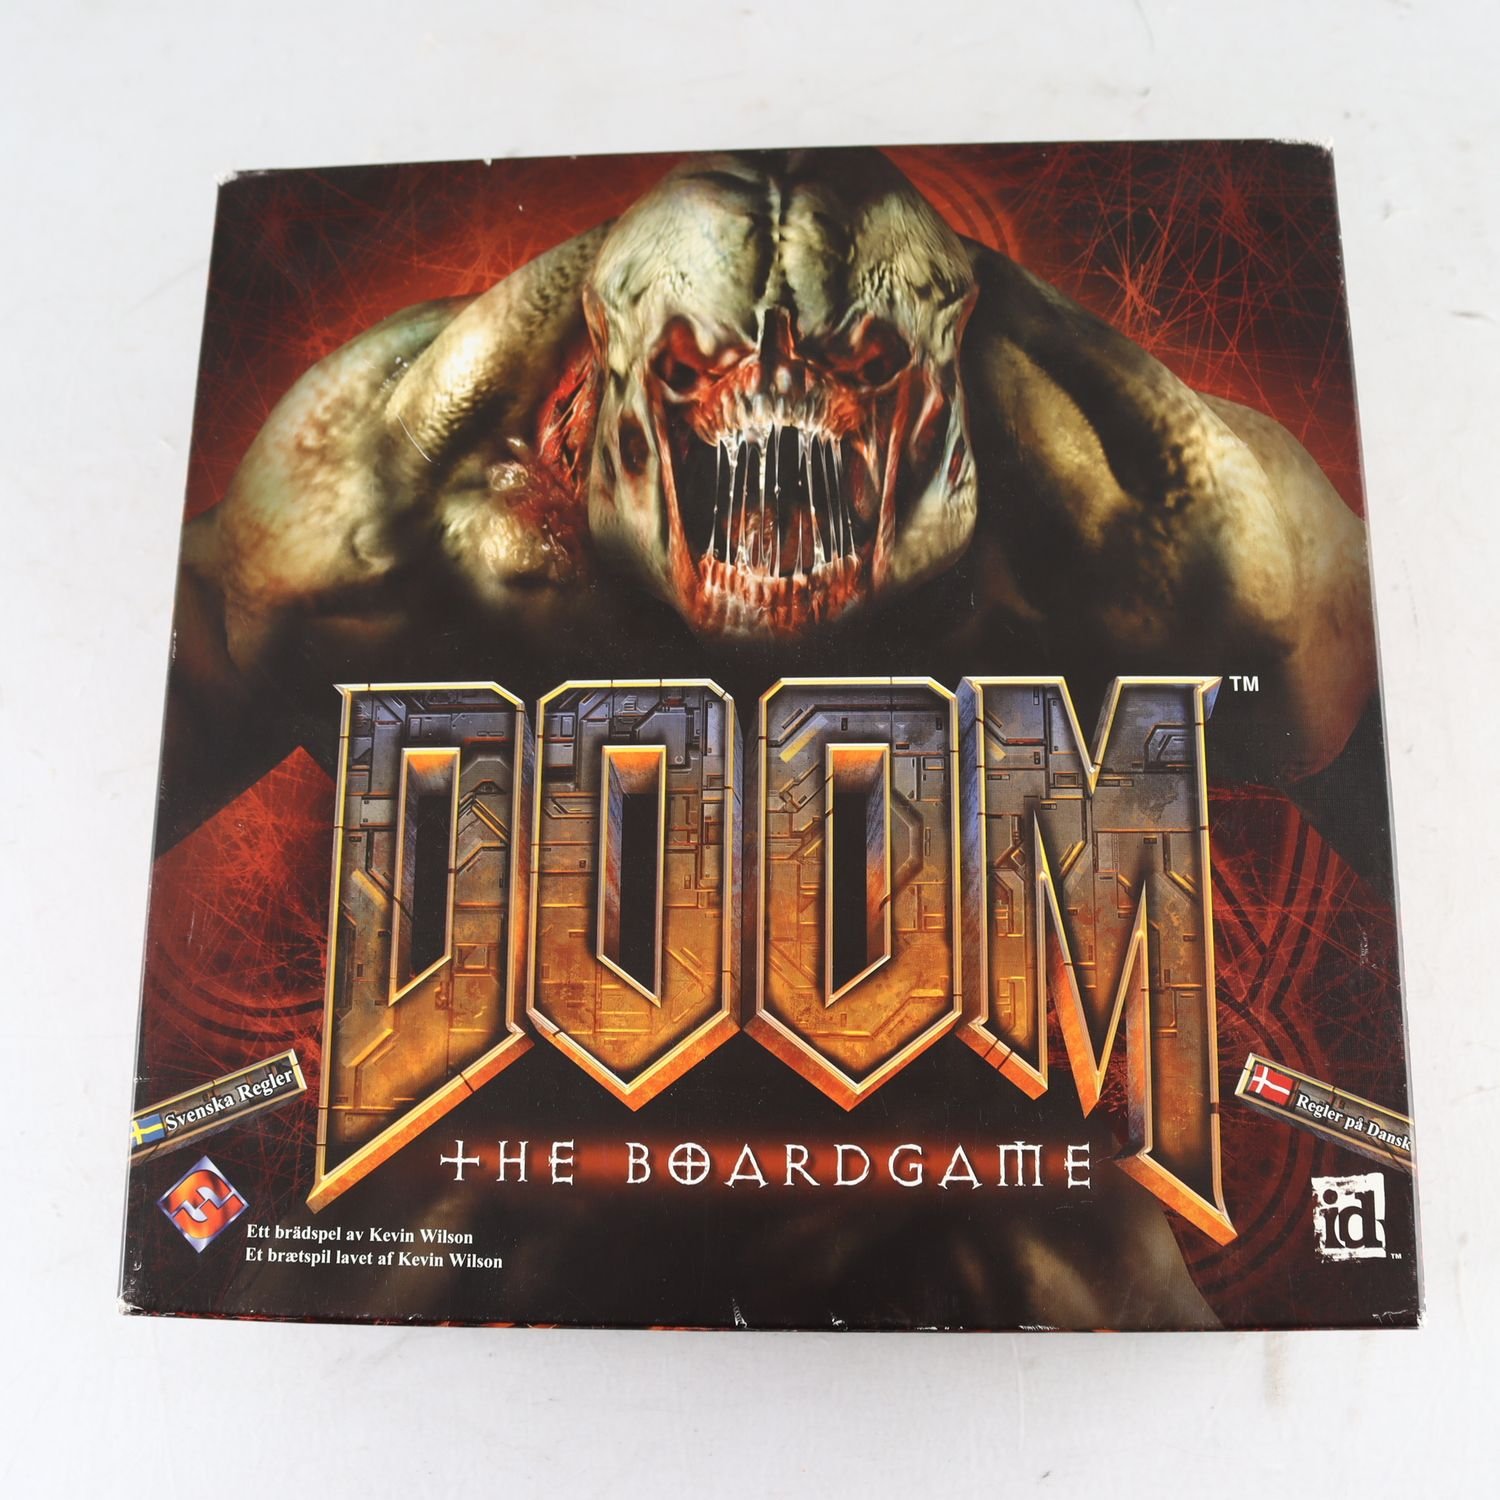 Spel, Doom, the boardgame.